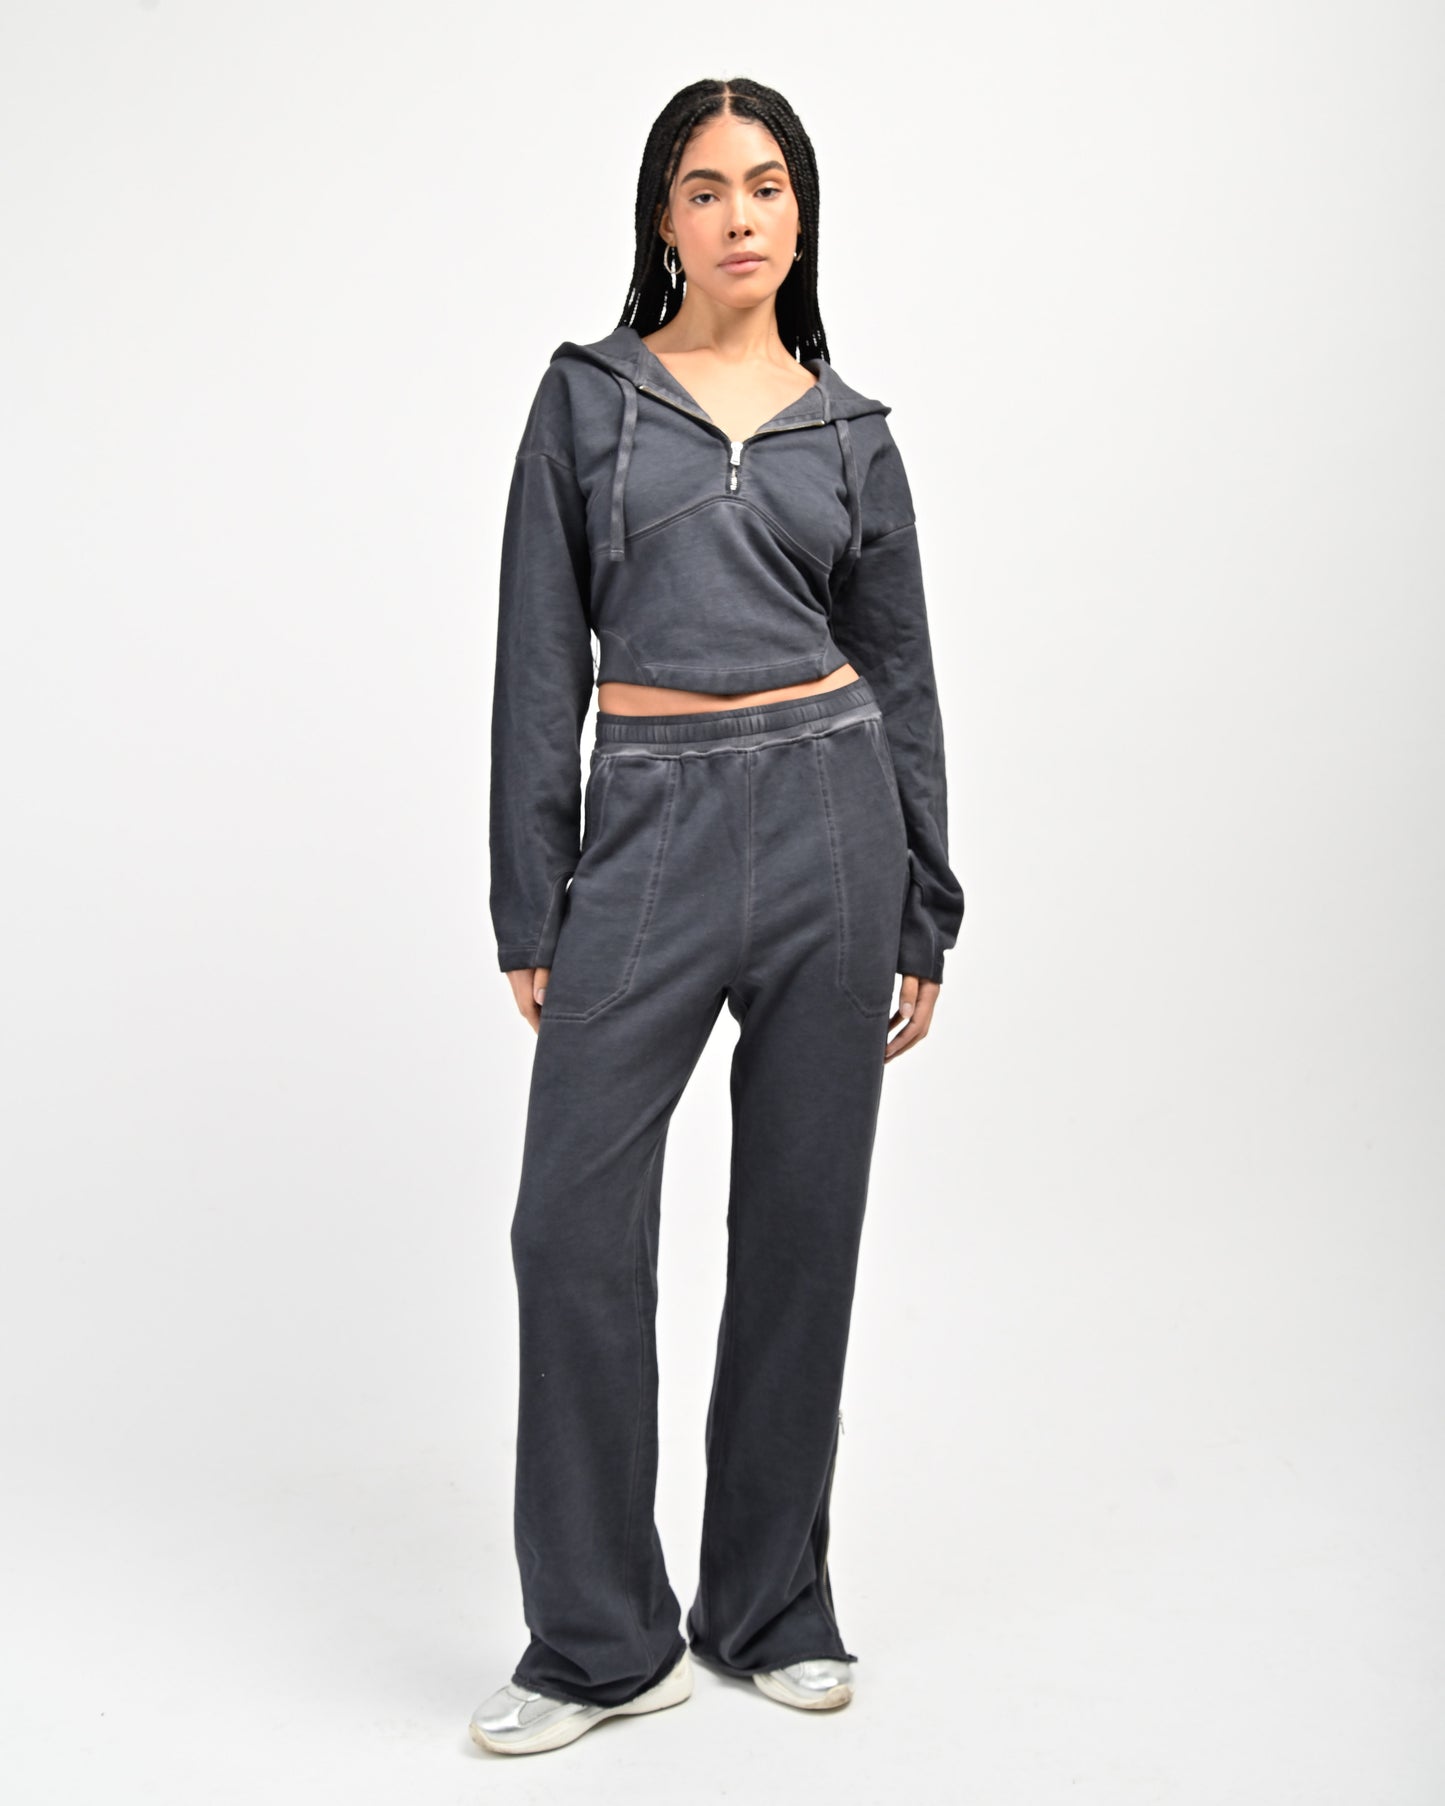 Model is wearing Allora Half-Zip Hooded Sweatshirt and Allora Track Sweatpants by Aseye Studio.